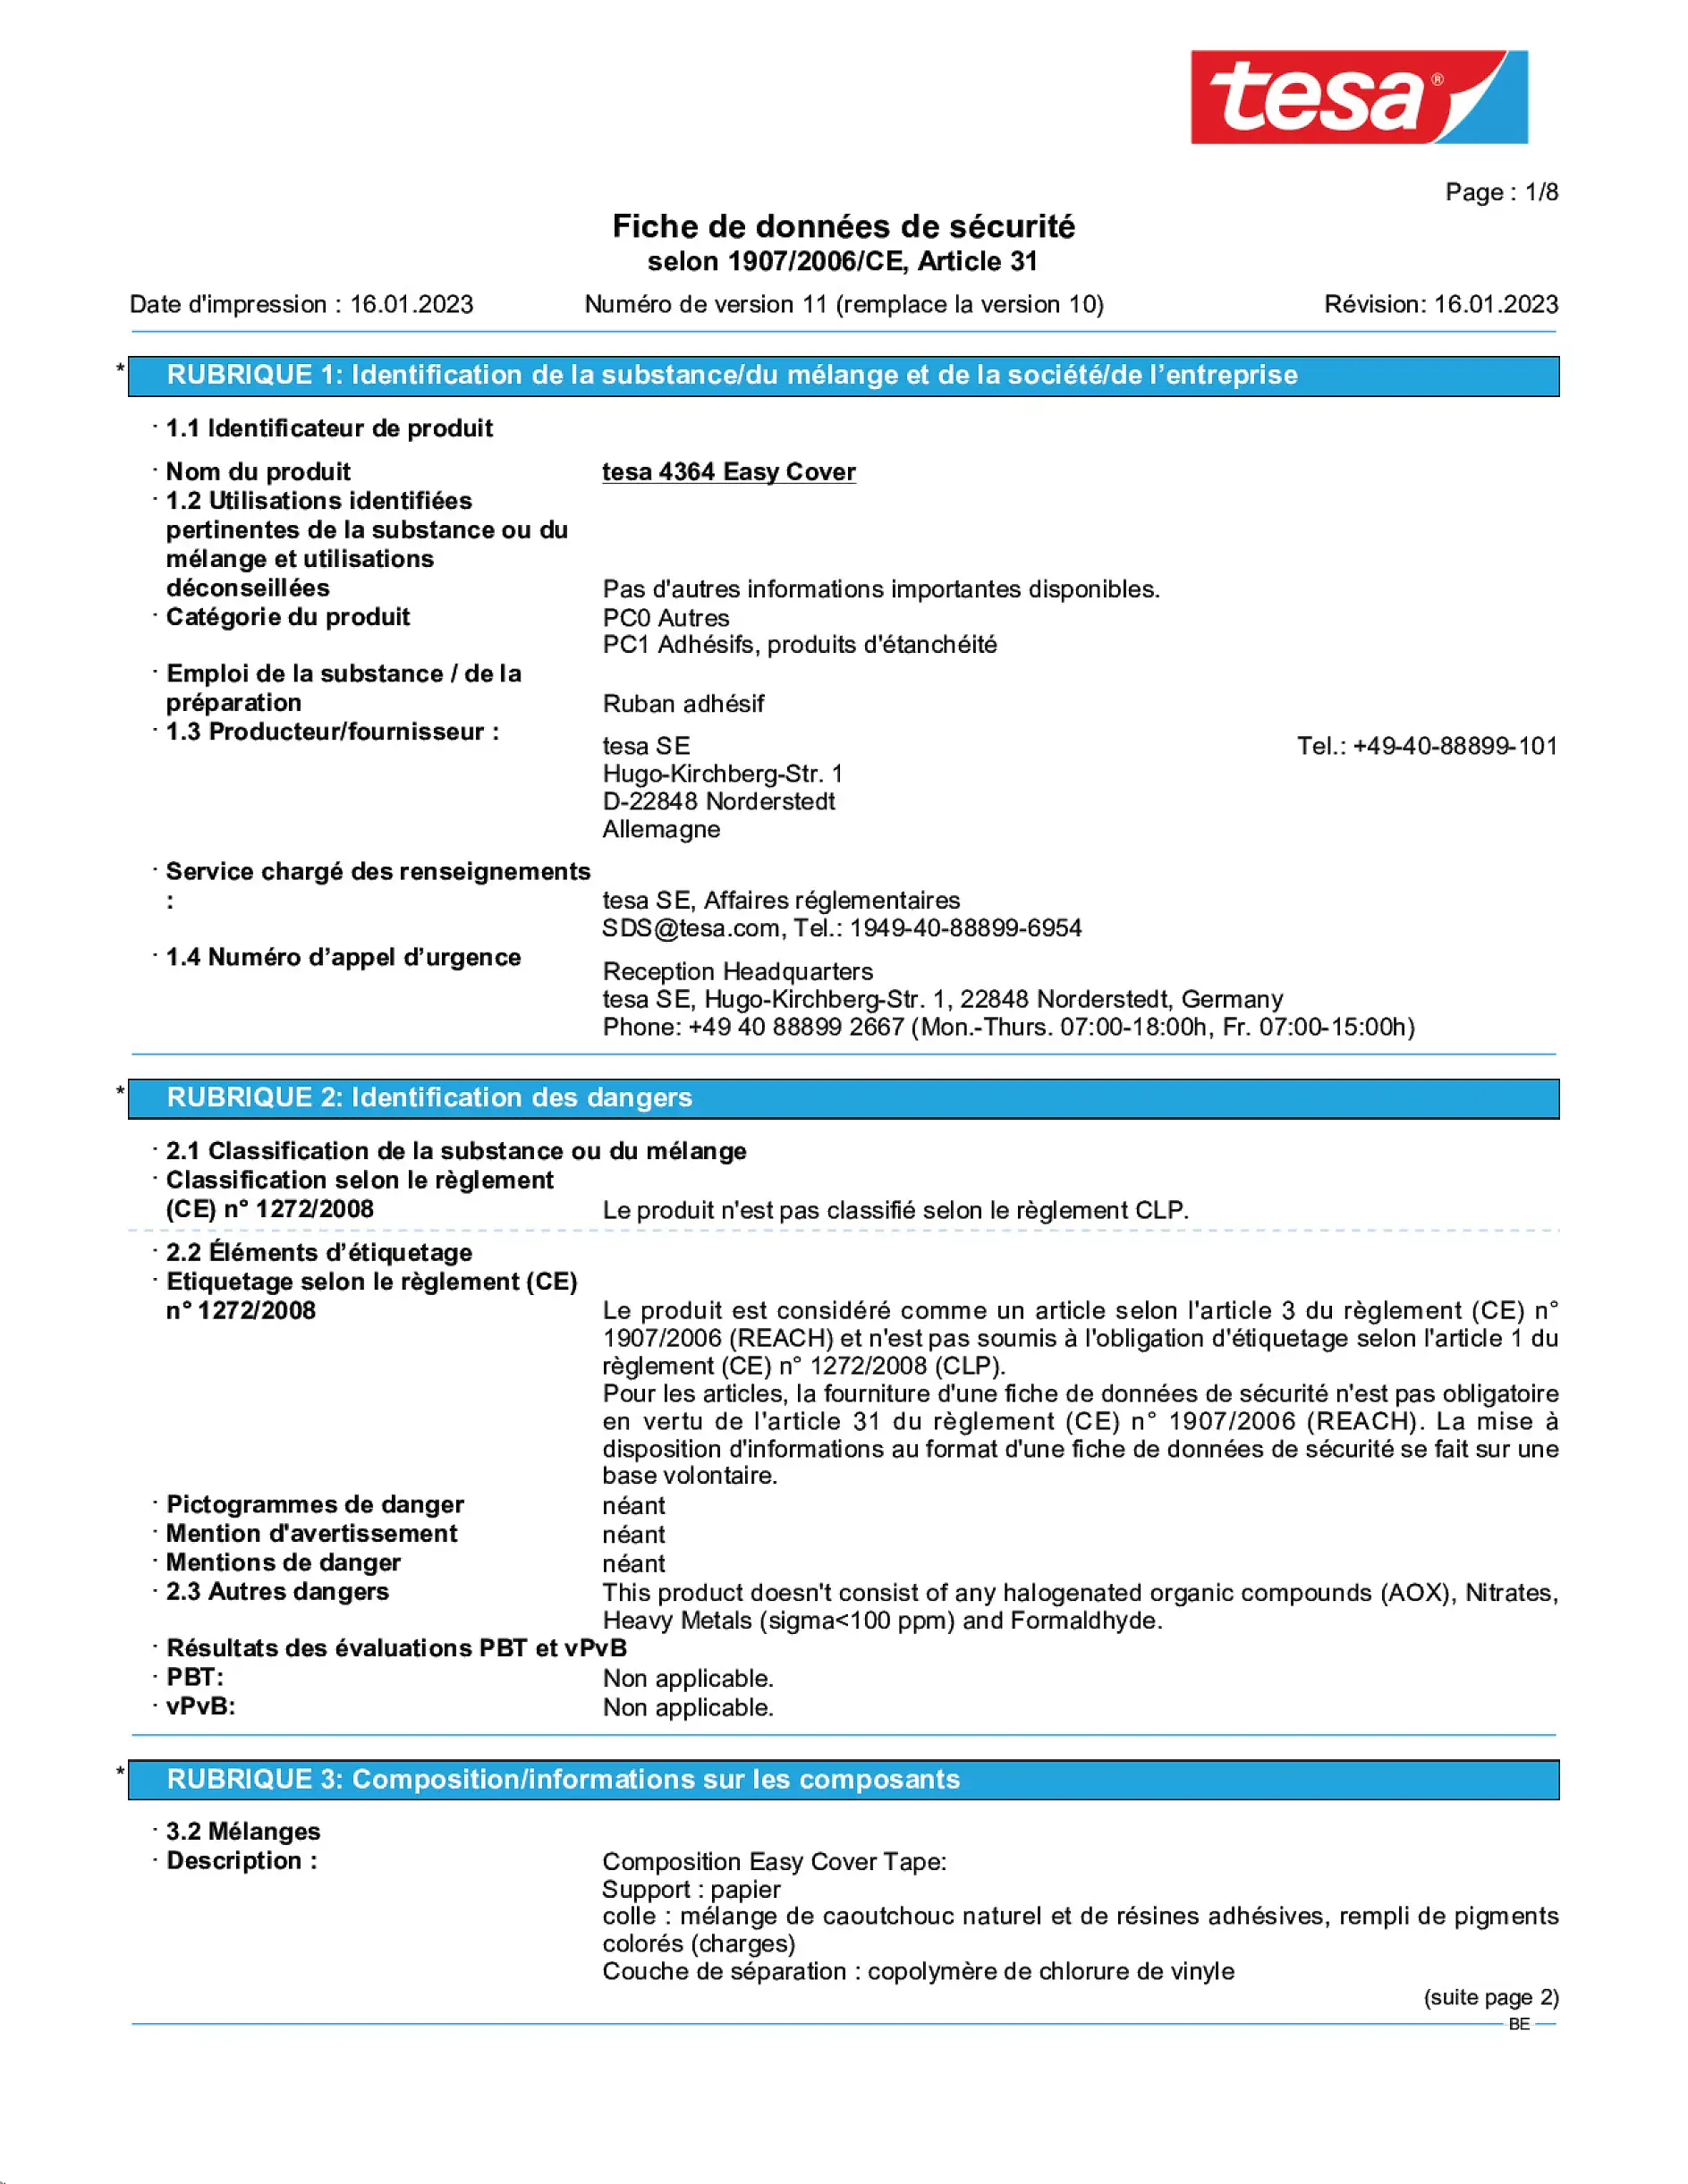 Safety data sheet_tesa® Professional 04364_nl-BE_v11